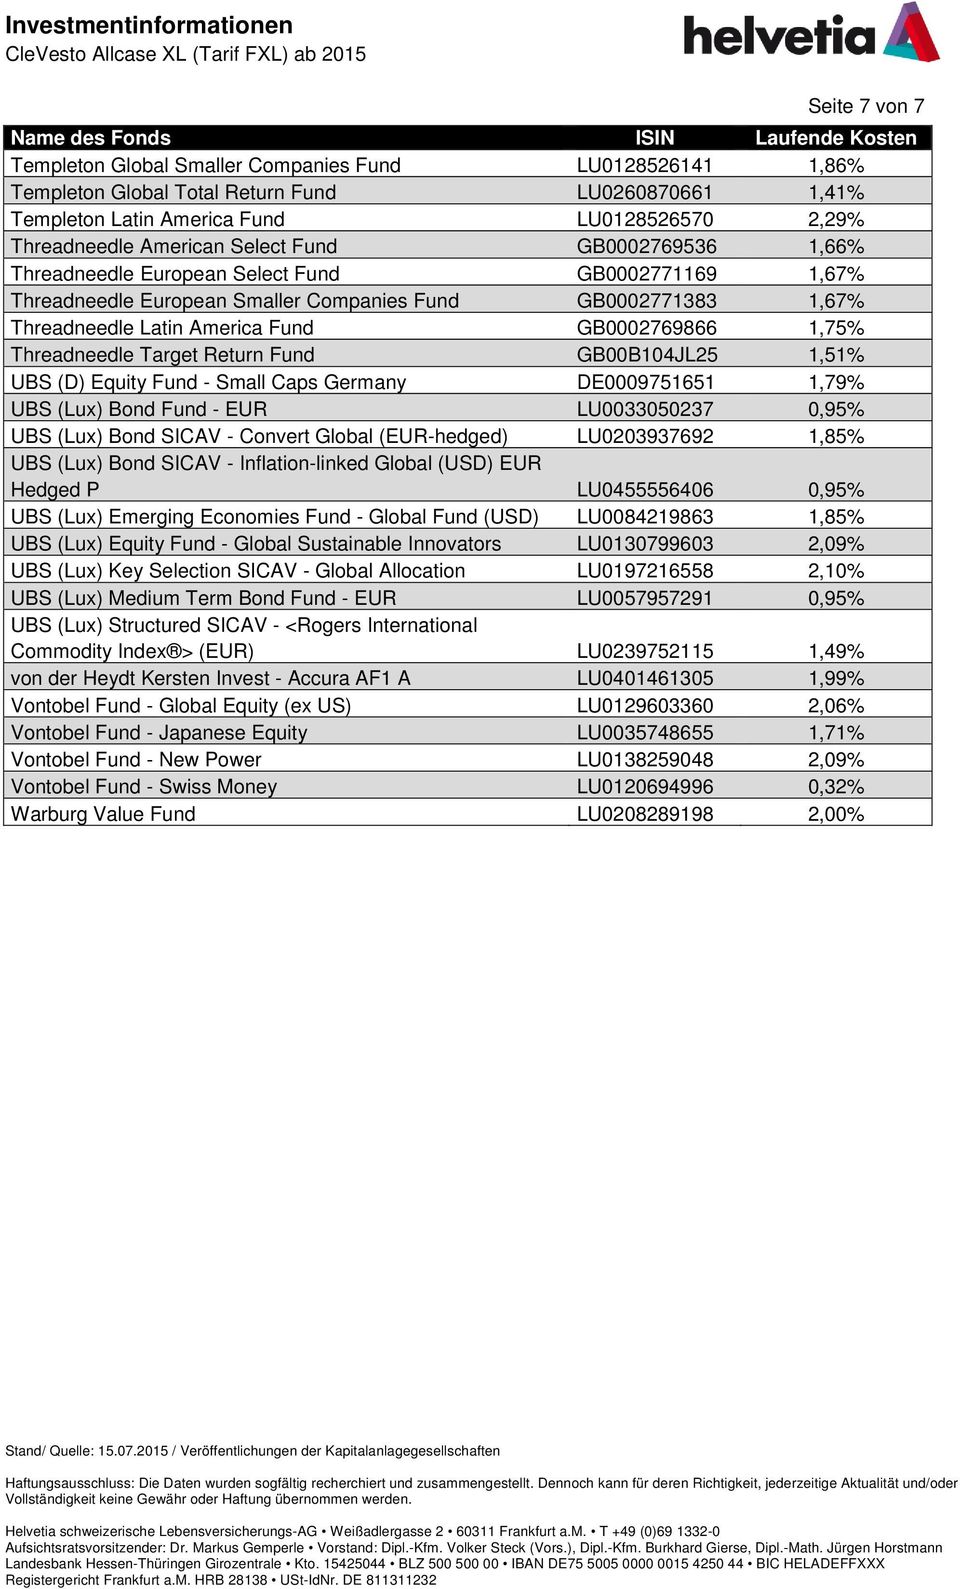 Threadneedle Target Return Fund GB00B104JL25 1,51% UBS (D) Equity Fund - Small Caps Germany DE0009751651 1,79% UBS (Lux) Bond Fund - EUR LU0033050237 0,95% UBS (Lux) Bond SICAV - Convert Global